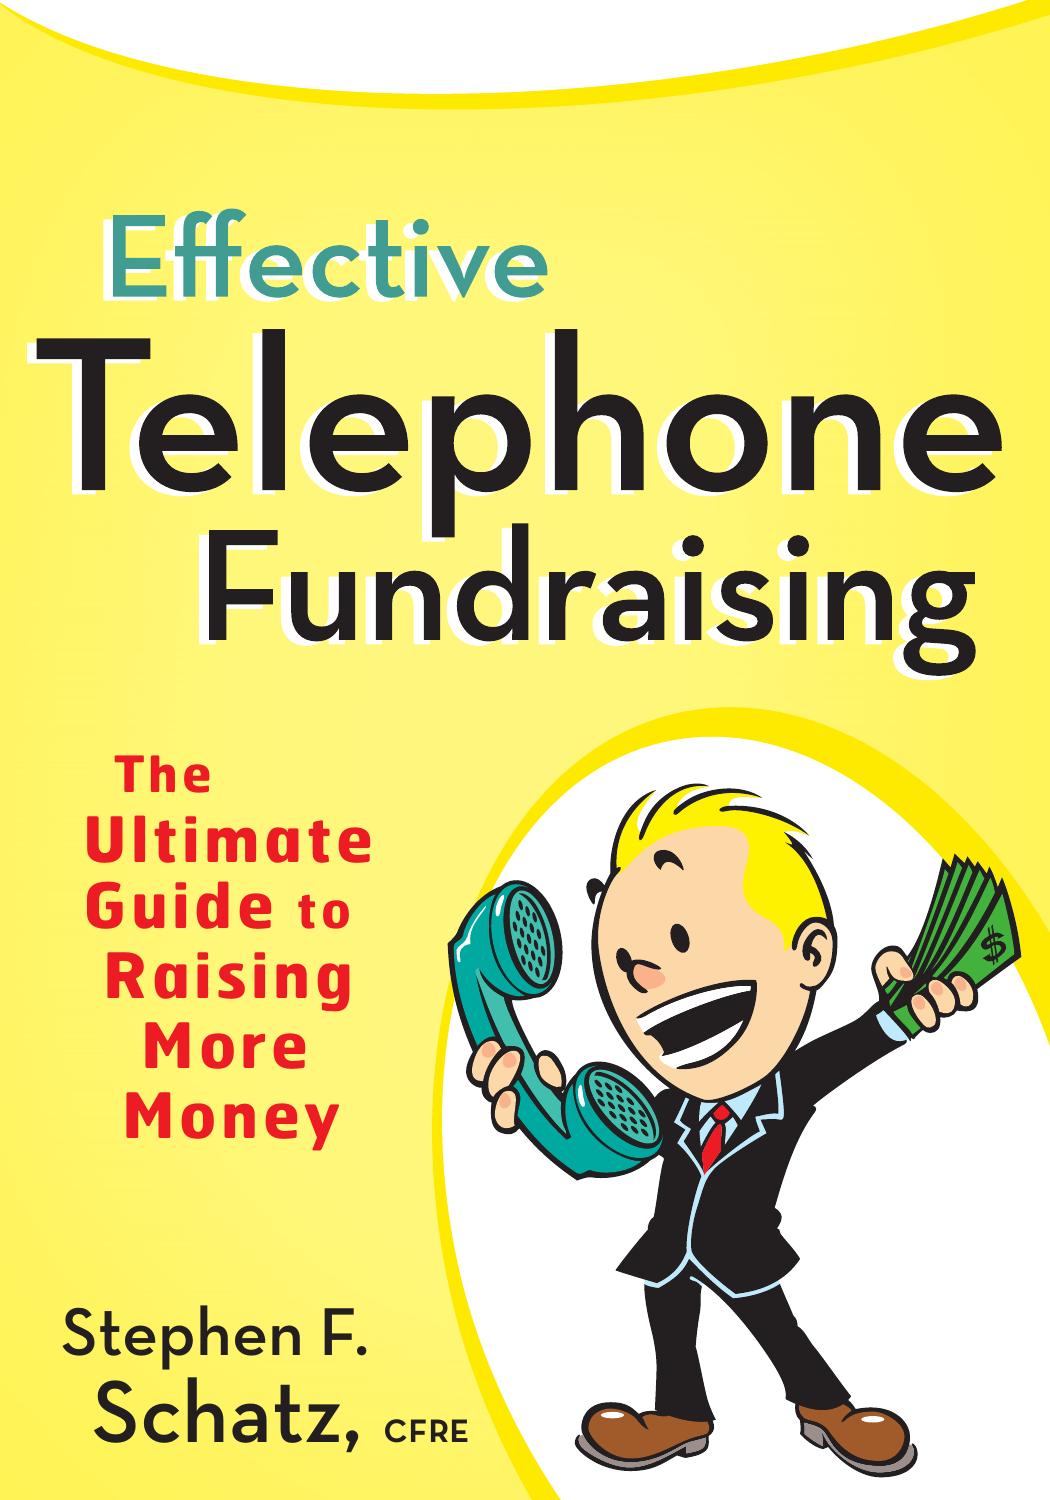 Effective Telephone Fundraising by Stephen F. Schatz